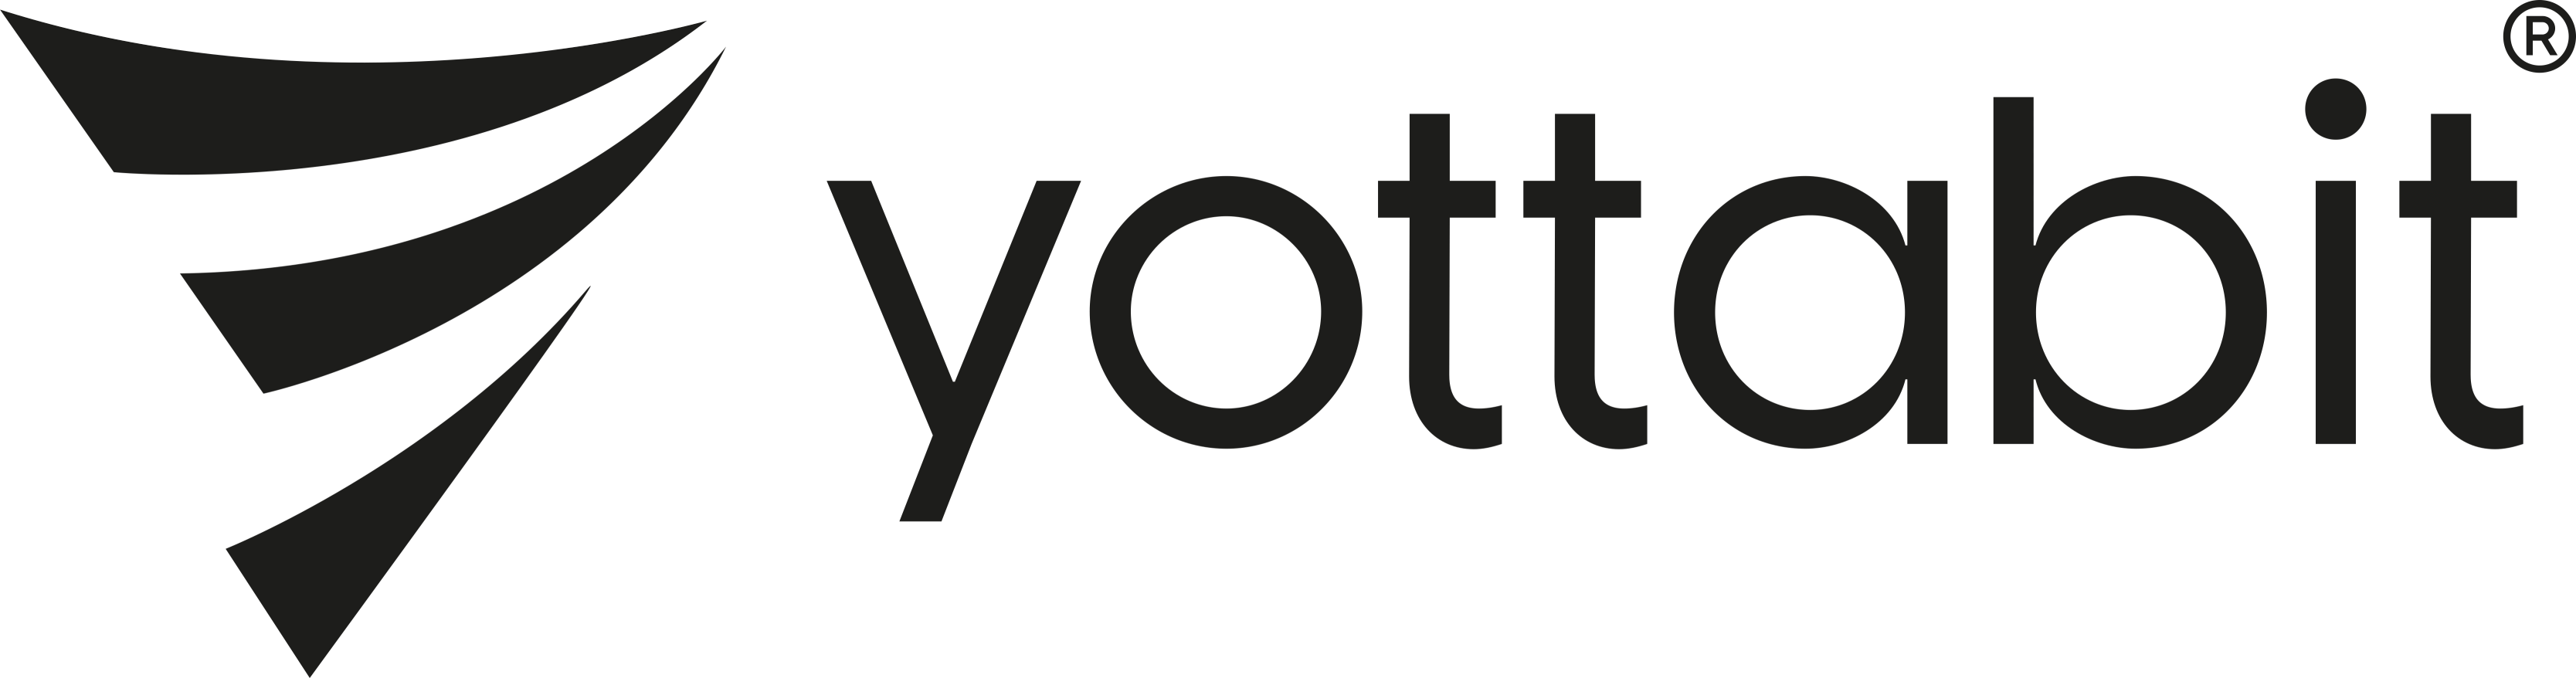 Yottabit